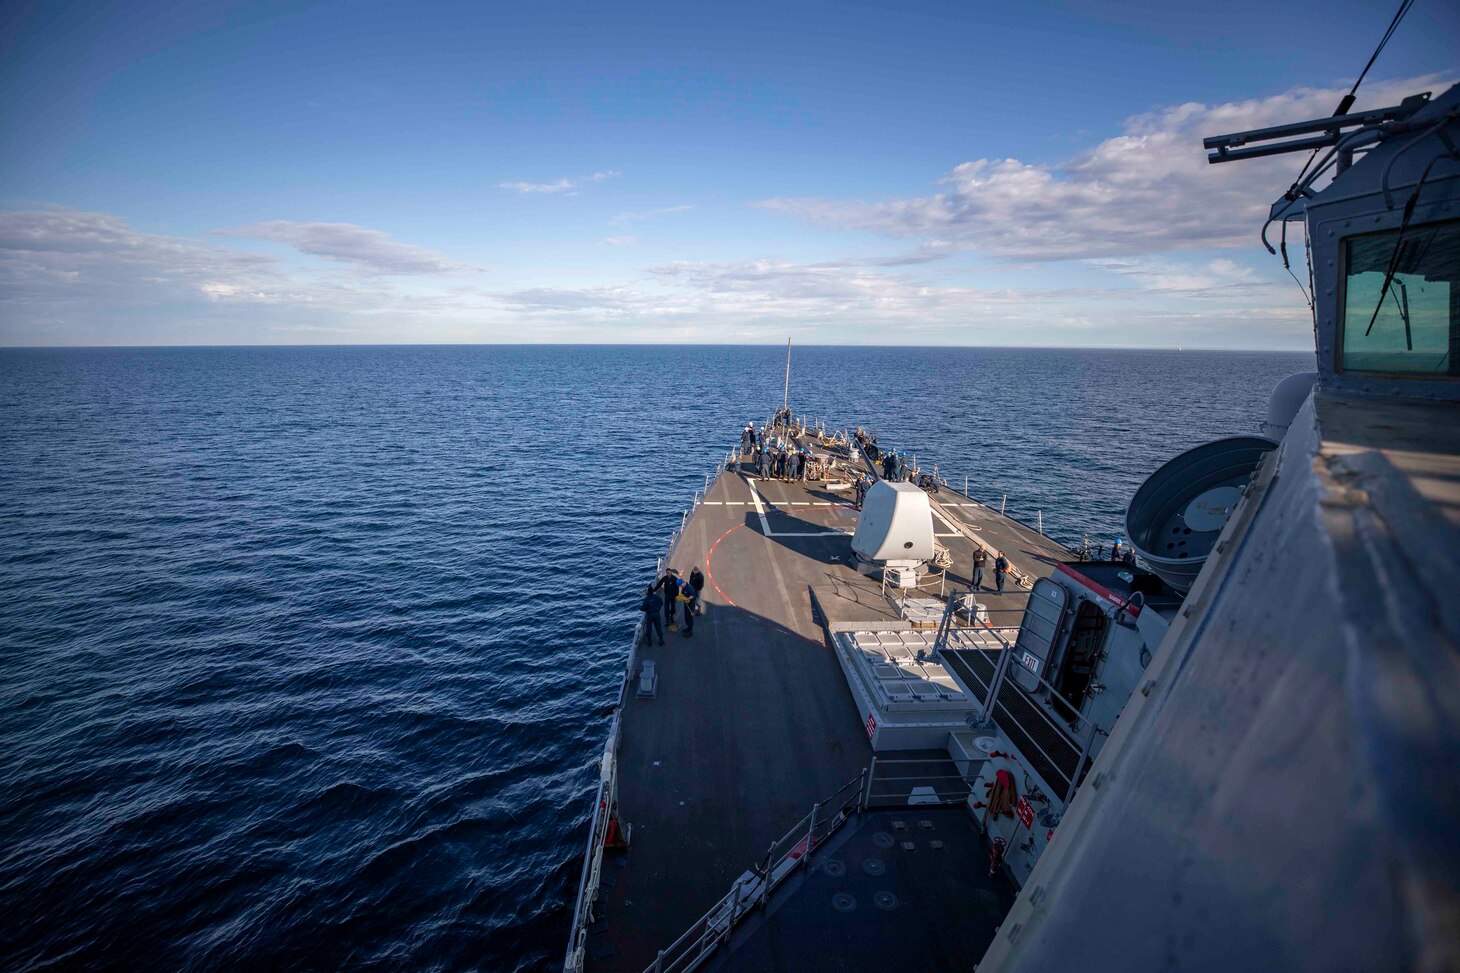 The Arleigh Burke-class guided-missile destroyer USS Arleigh Burke (DDG 51) steams through the Atlantic Ocean, June 3, 2022.